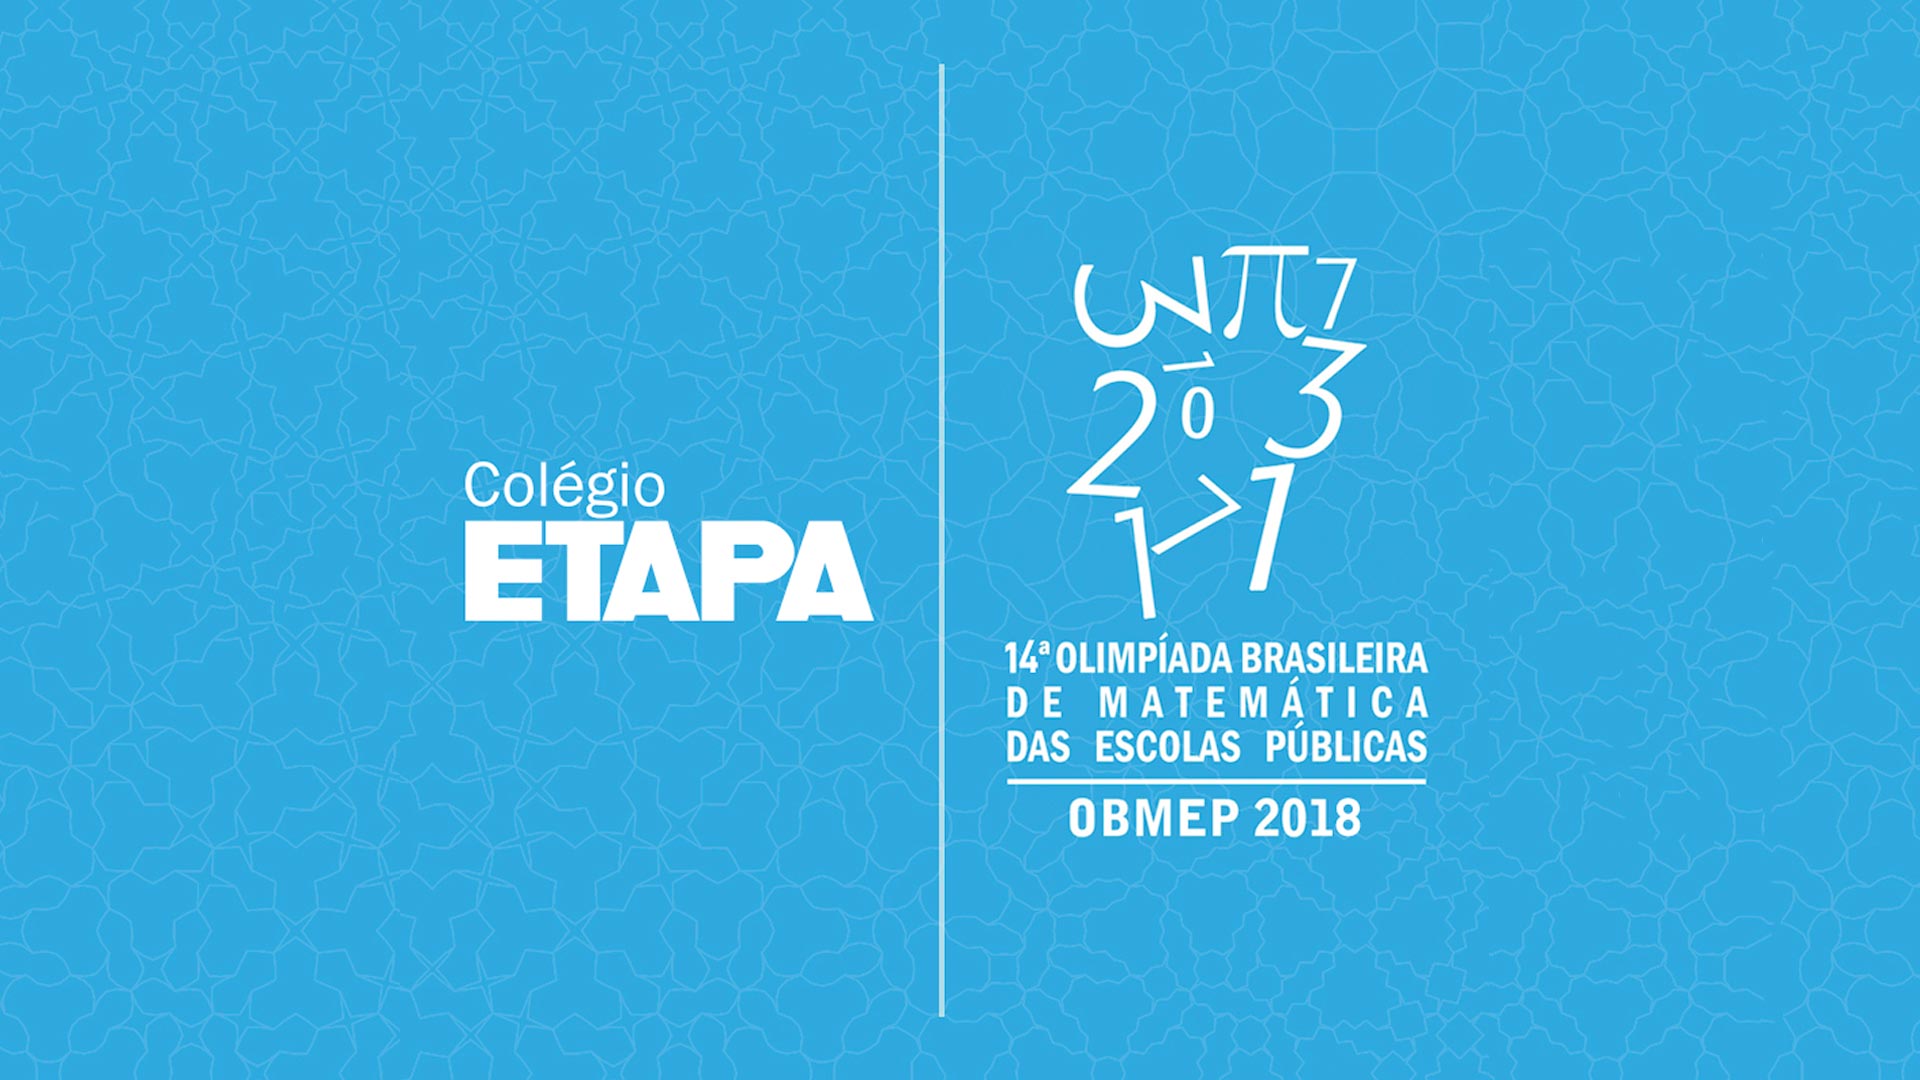 Colegio-Etapa-e-destaque-na-OBMEP-2018